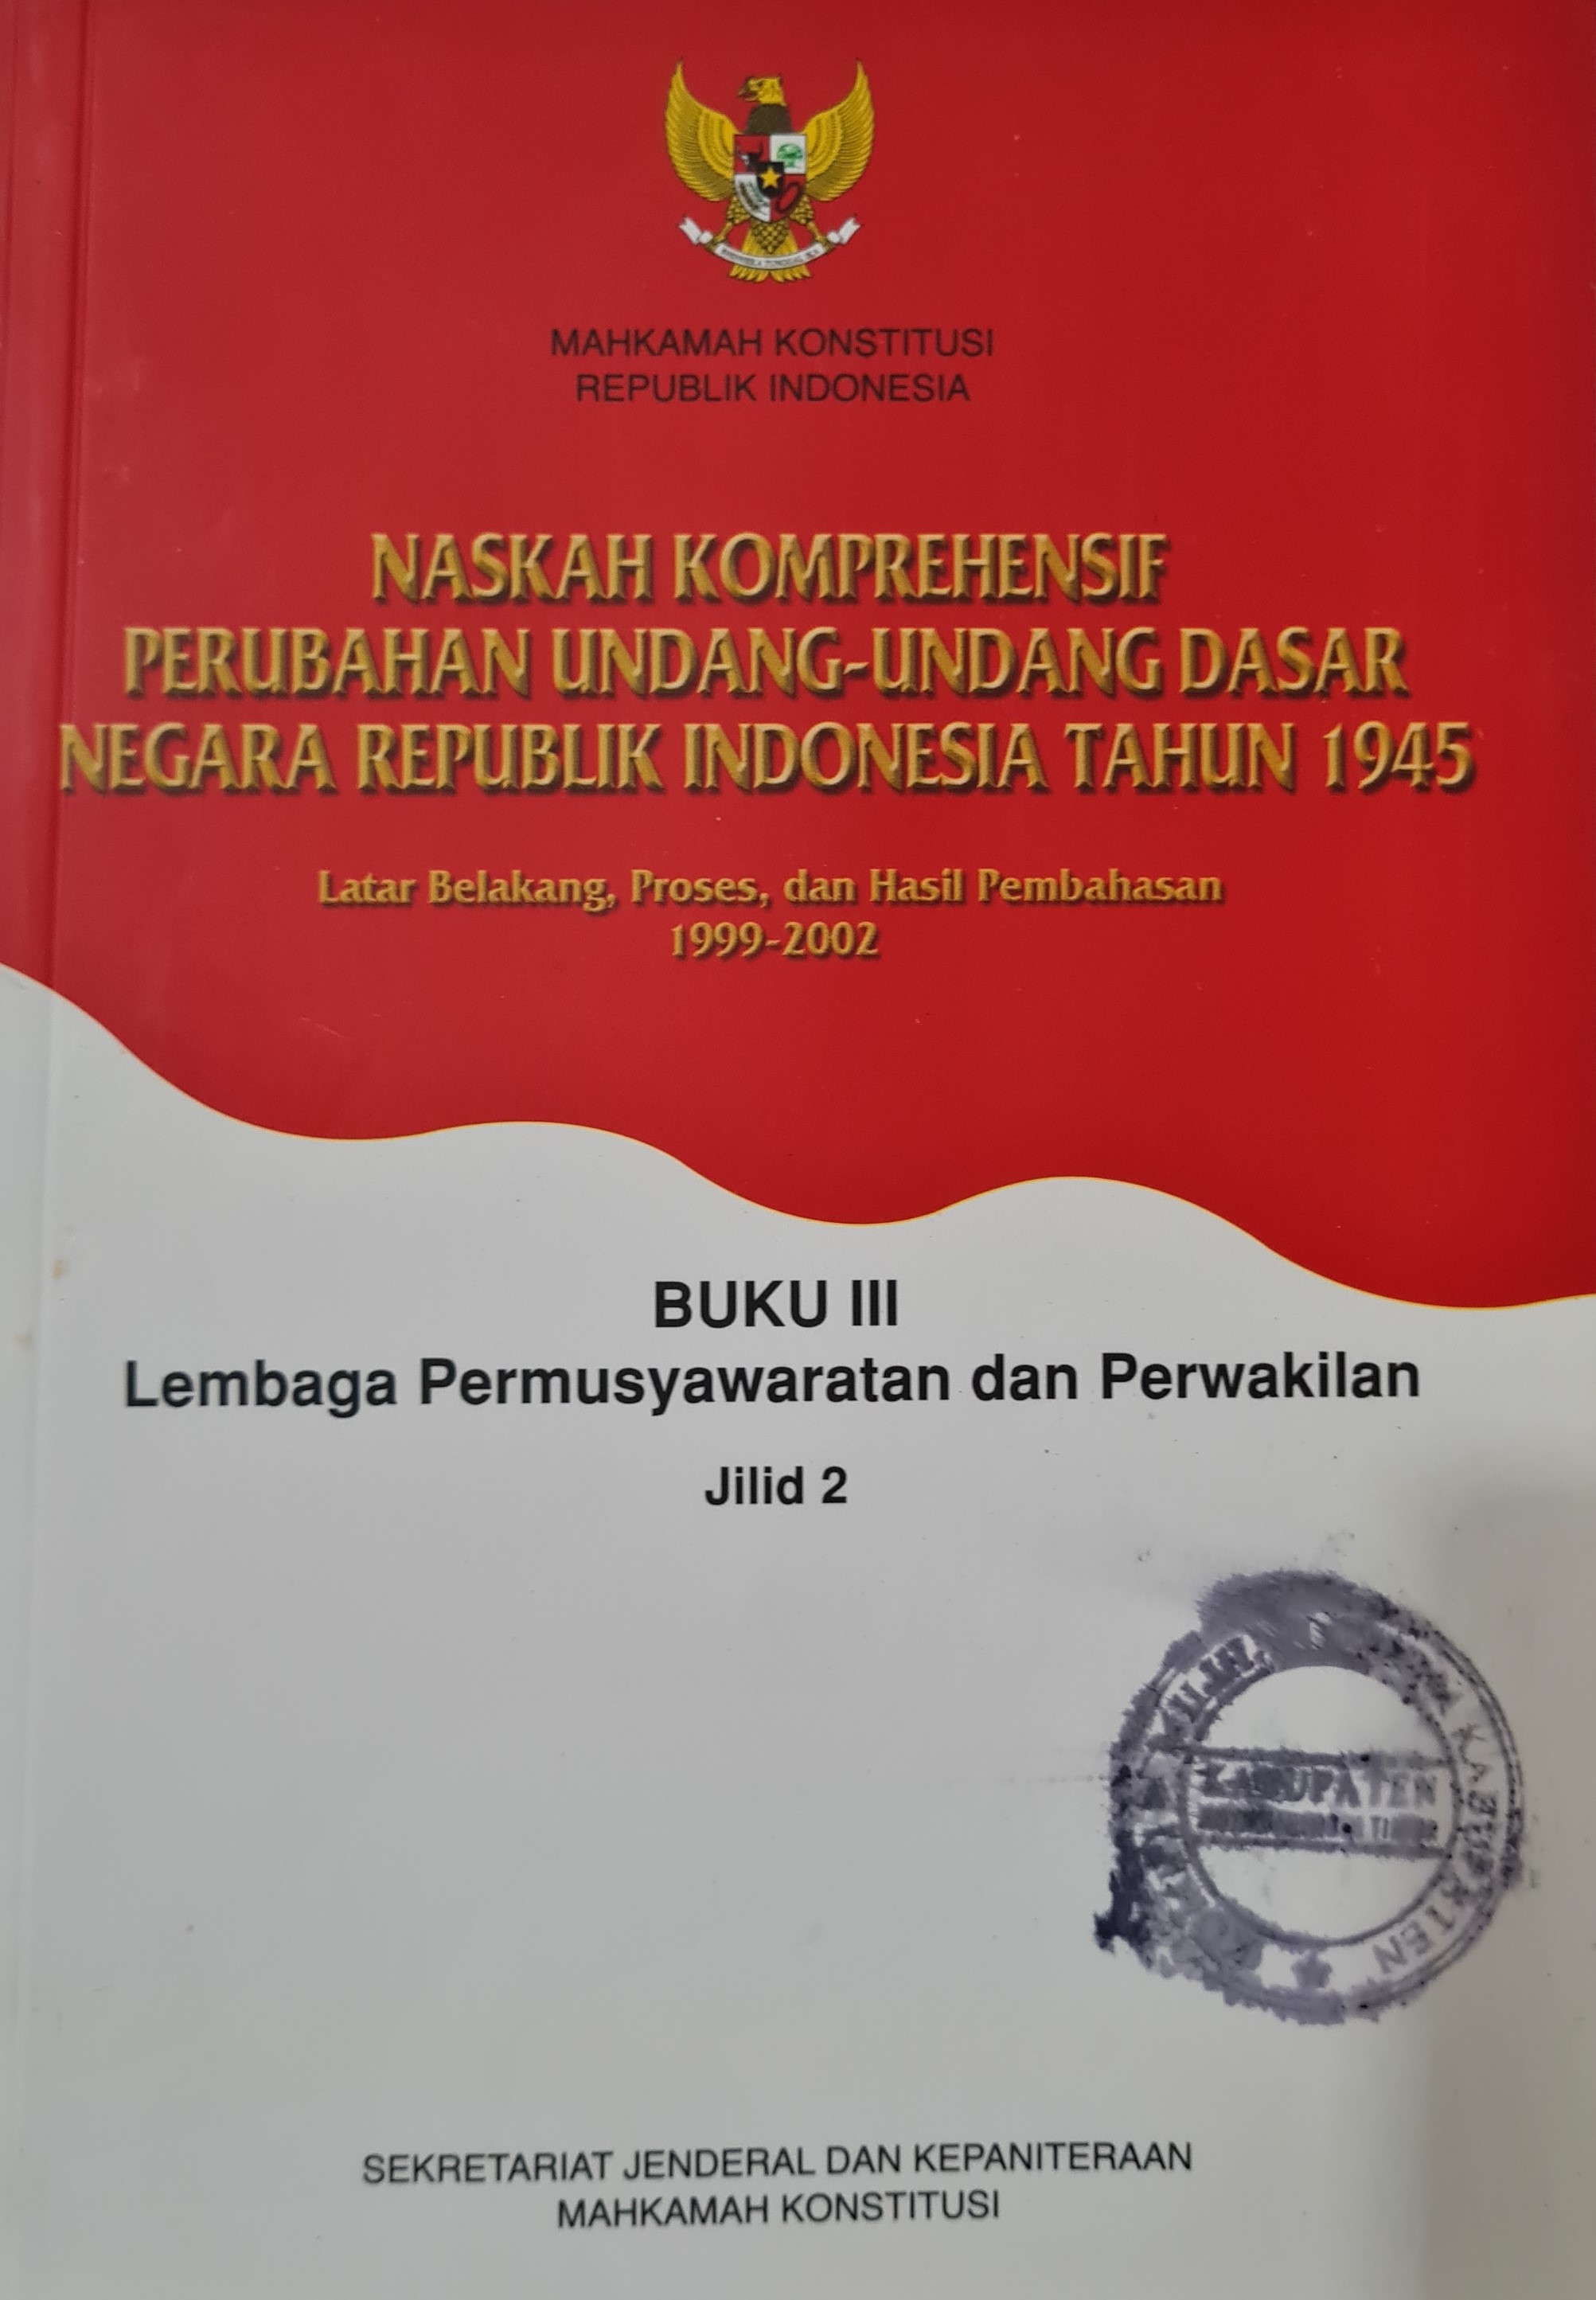 Naskah Komprehensif Perubahan Undang-Undang Dasar Negara Republik Indonesia Tahun 1945 Buku III Lembaga Permusyawaratan dan Perwakilan Jilid 2